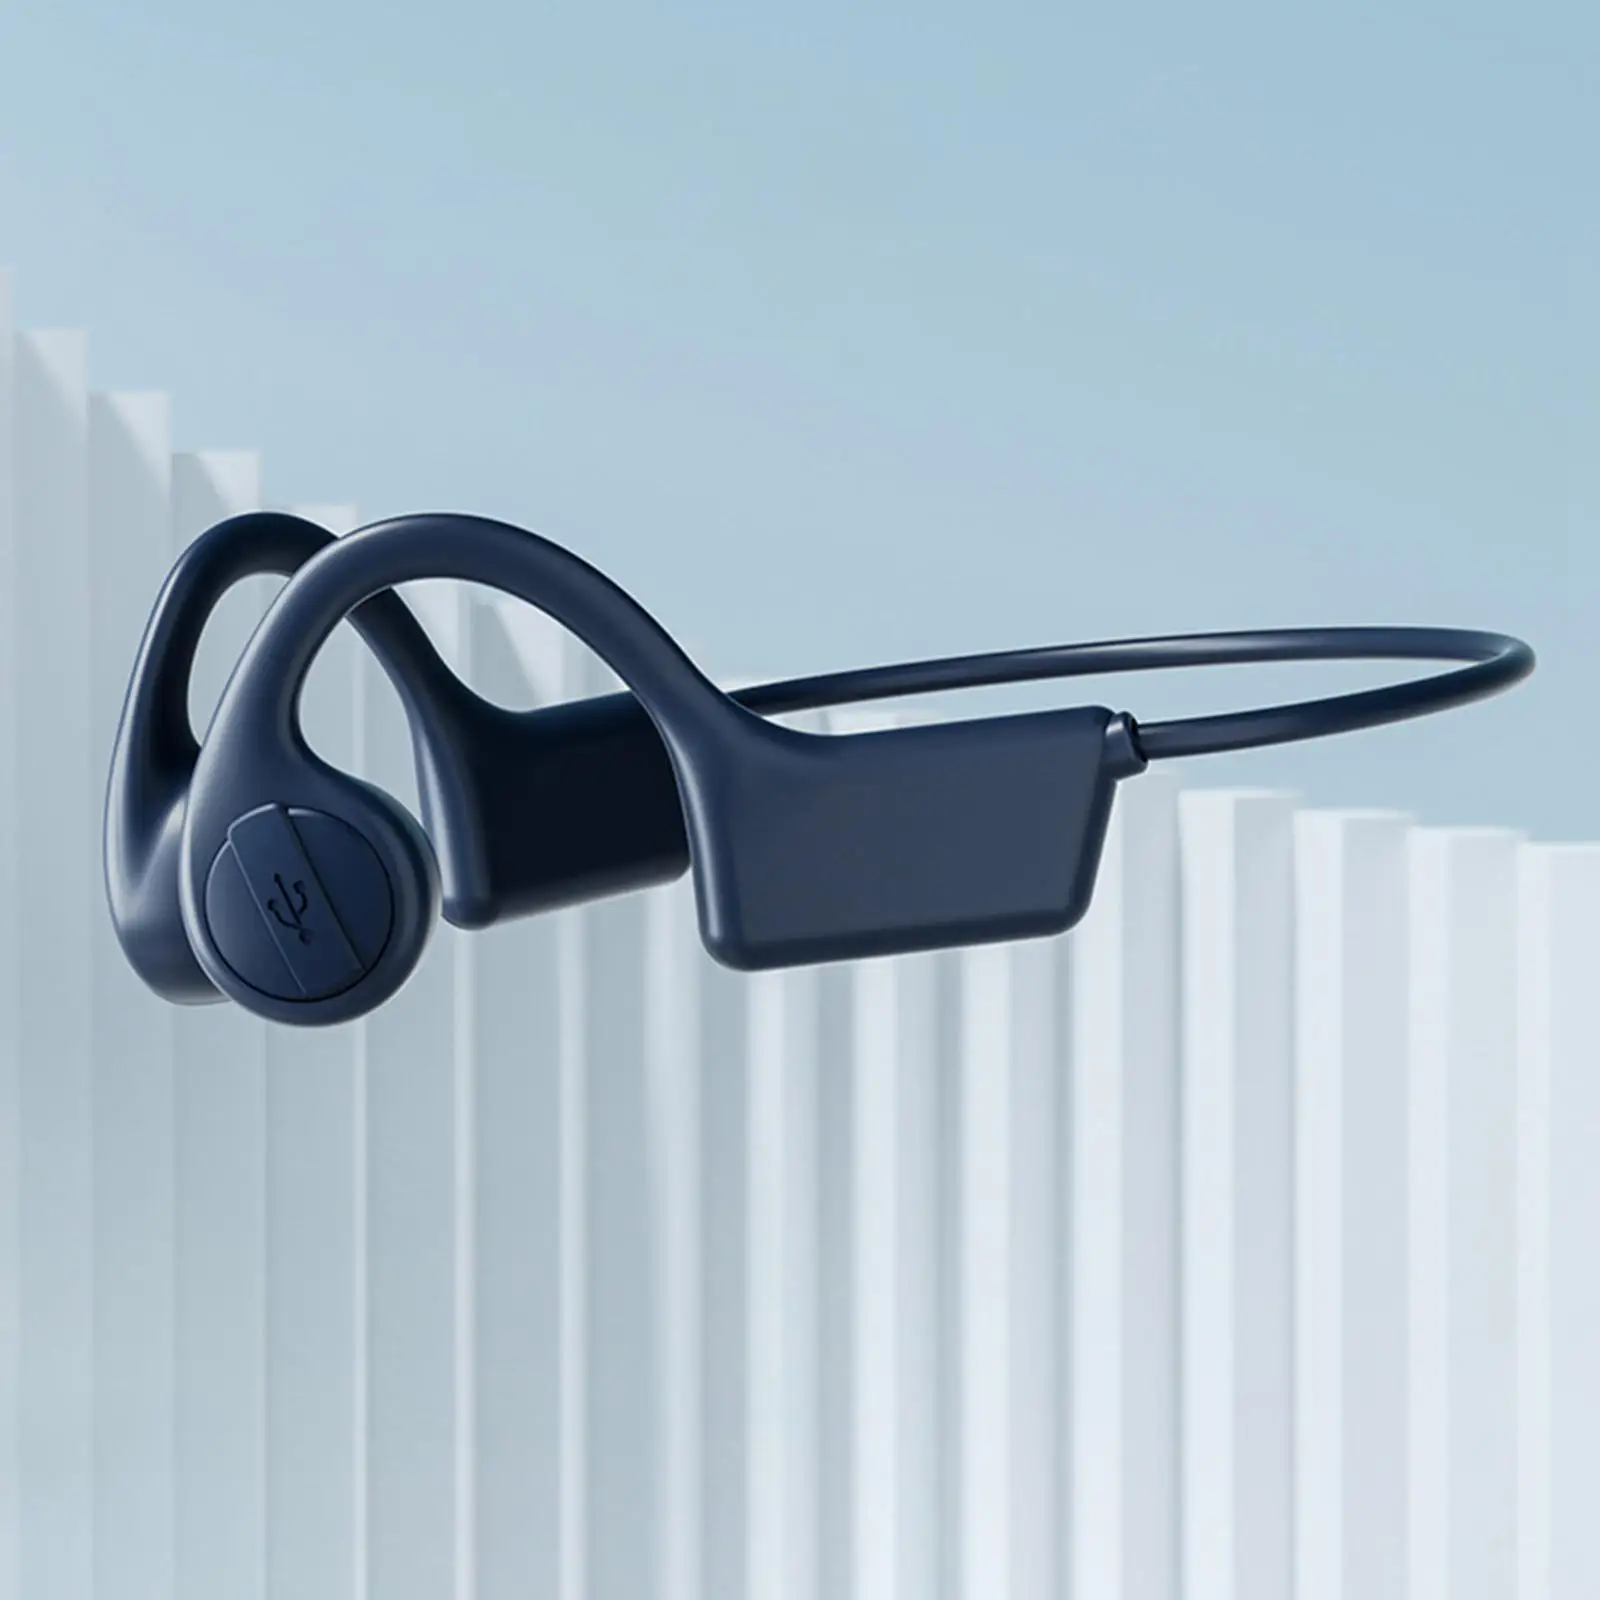 Bluetooth Headphone Bone Conduction Sweatproof HD Calling Open Ear Headset for Driving